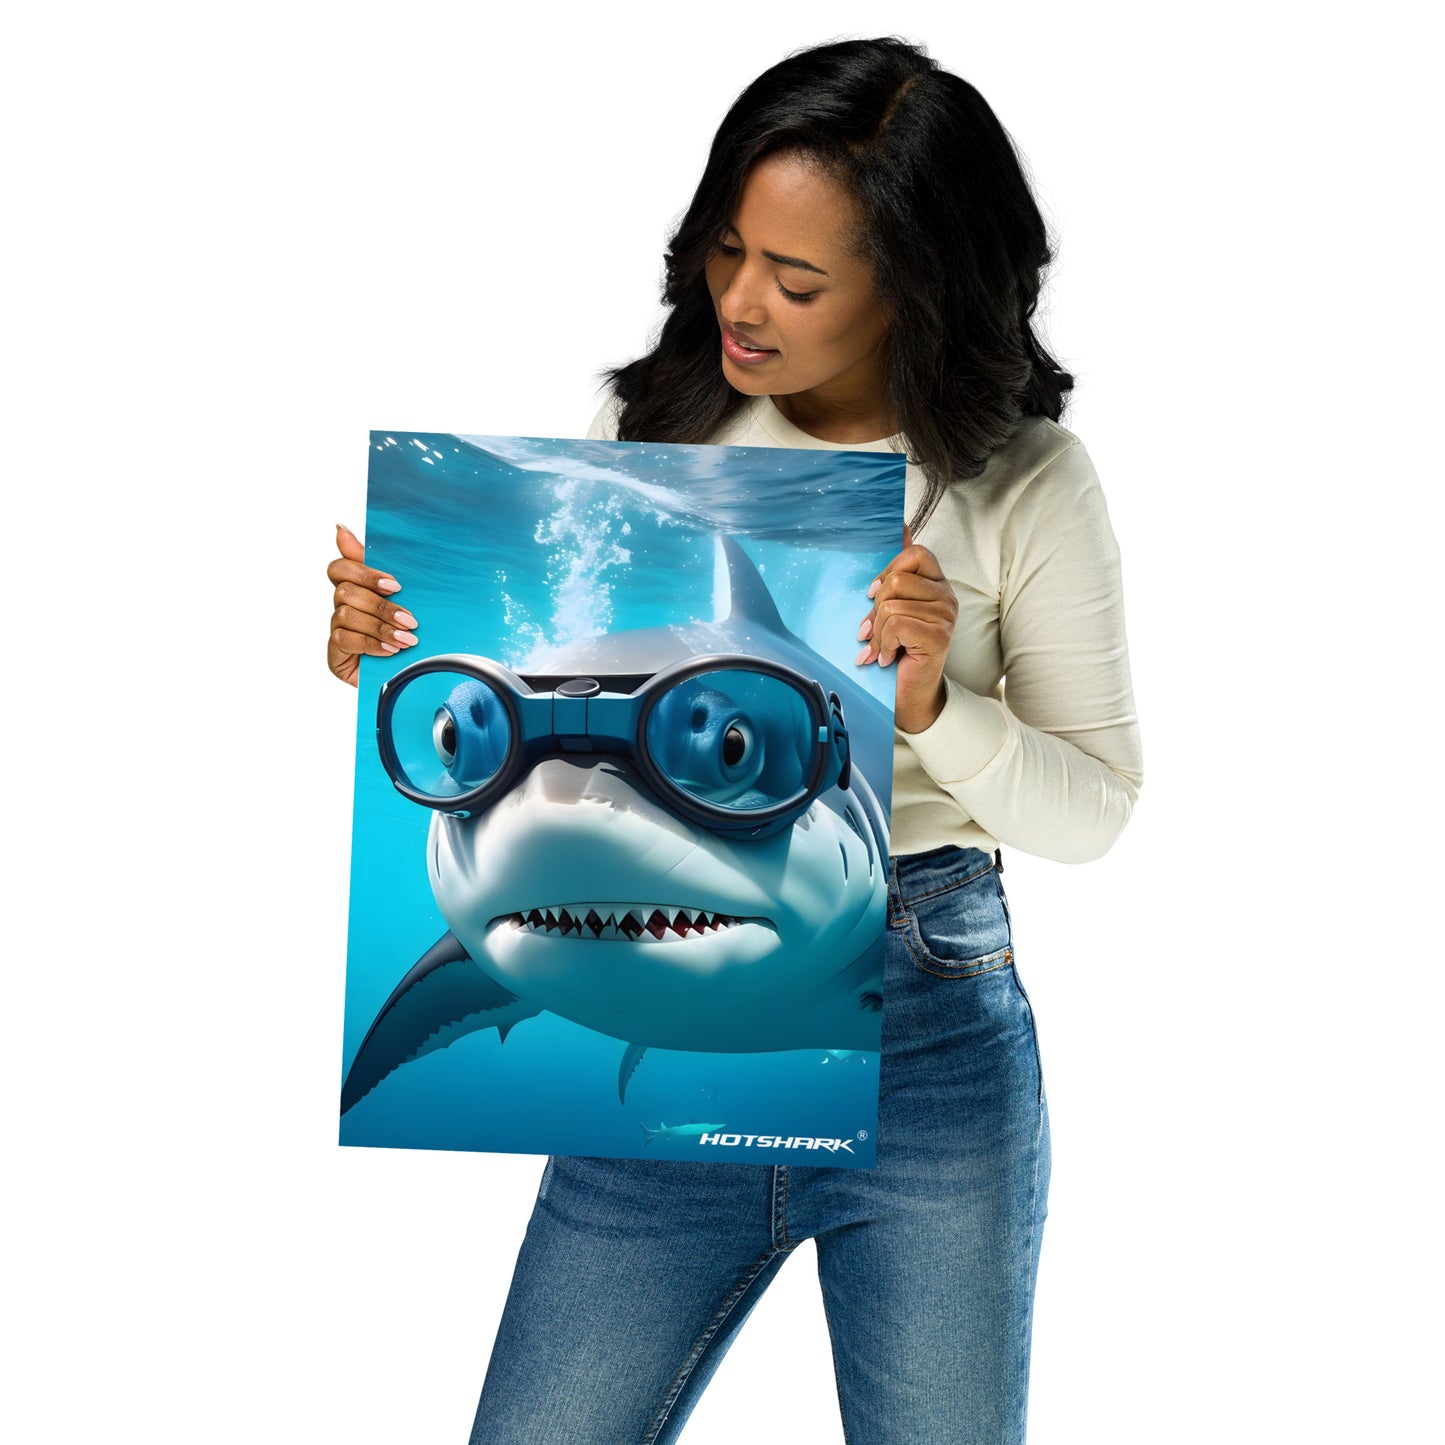 Diver1 Shark - Poster